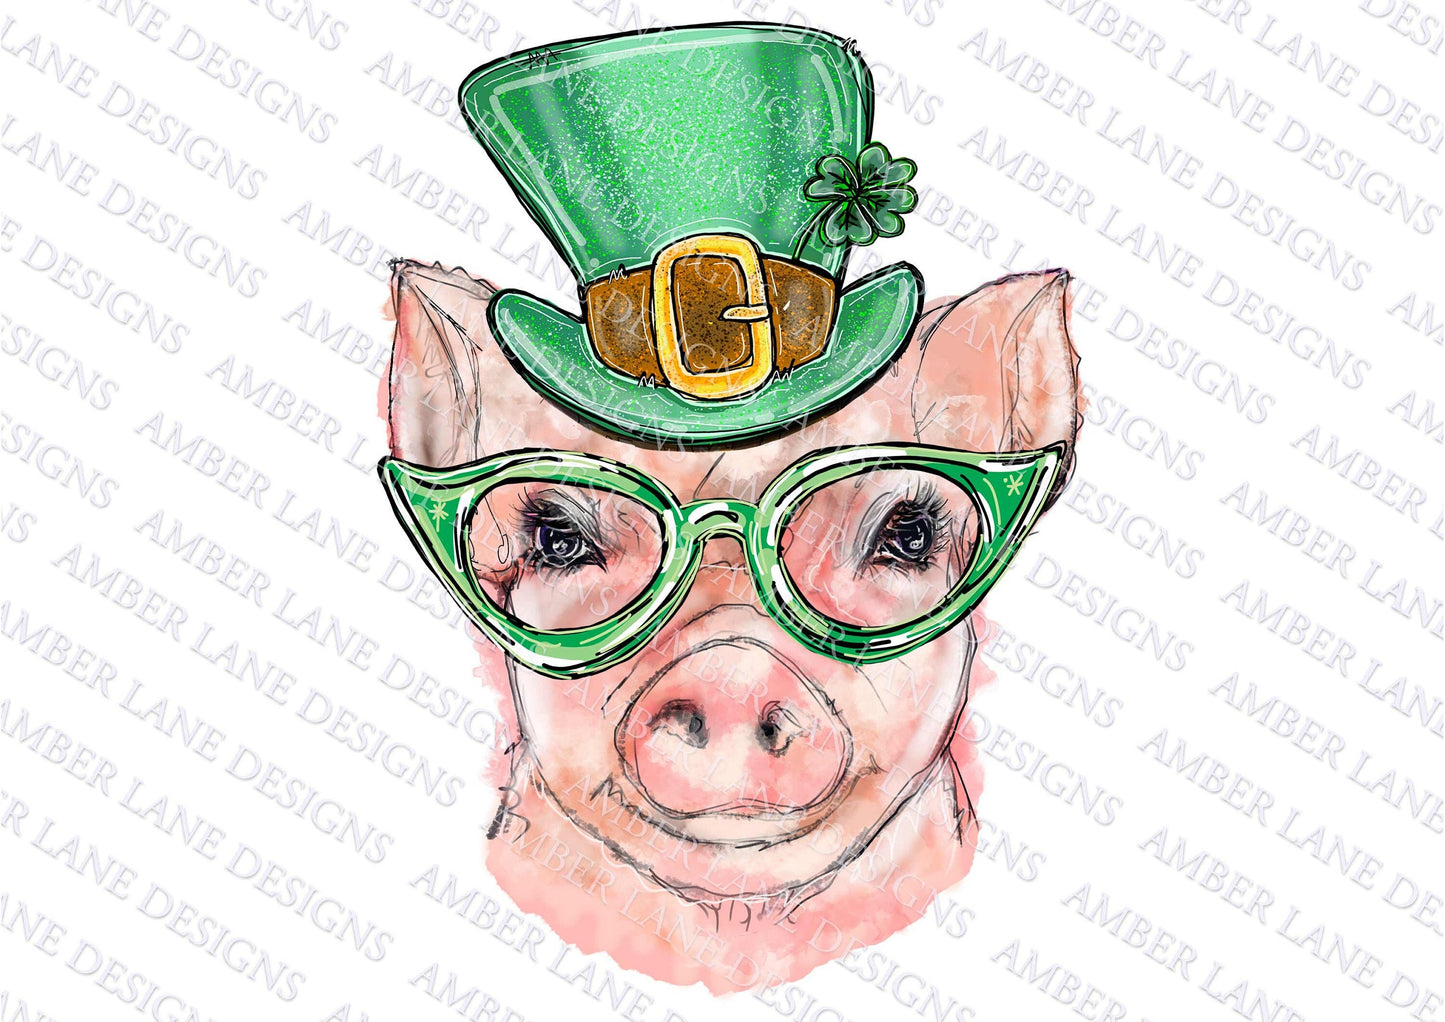 St Patricks Day pig png file